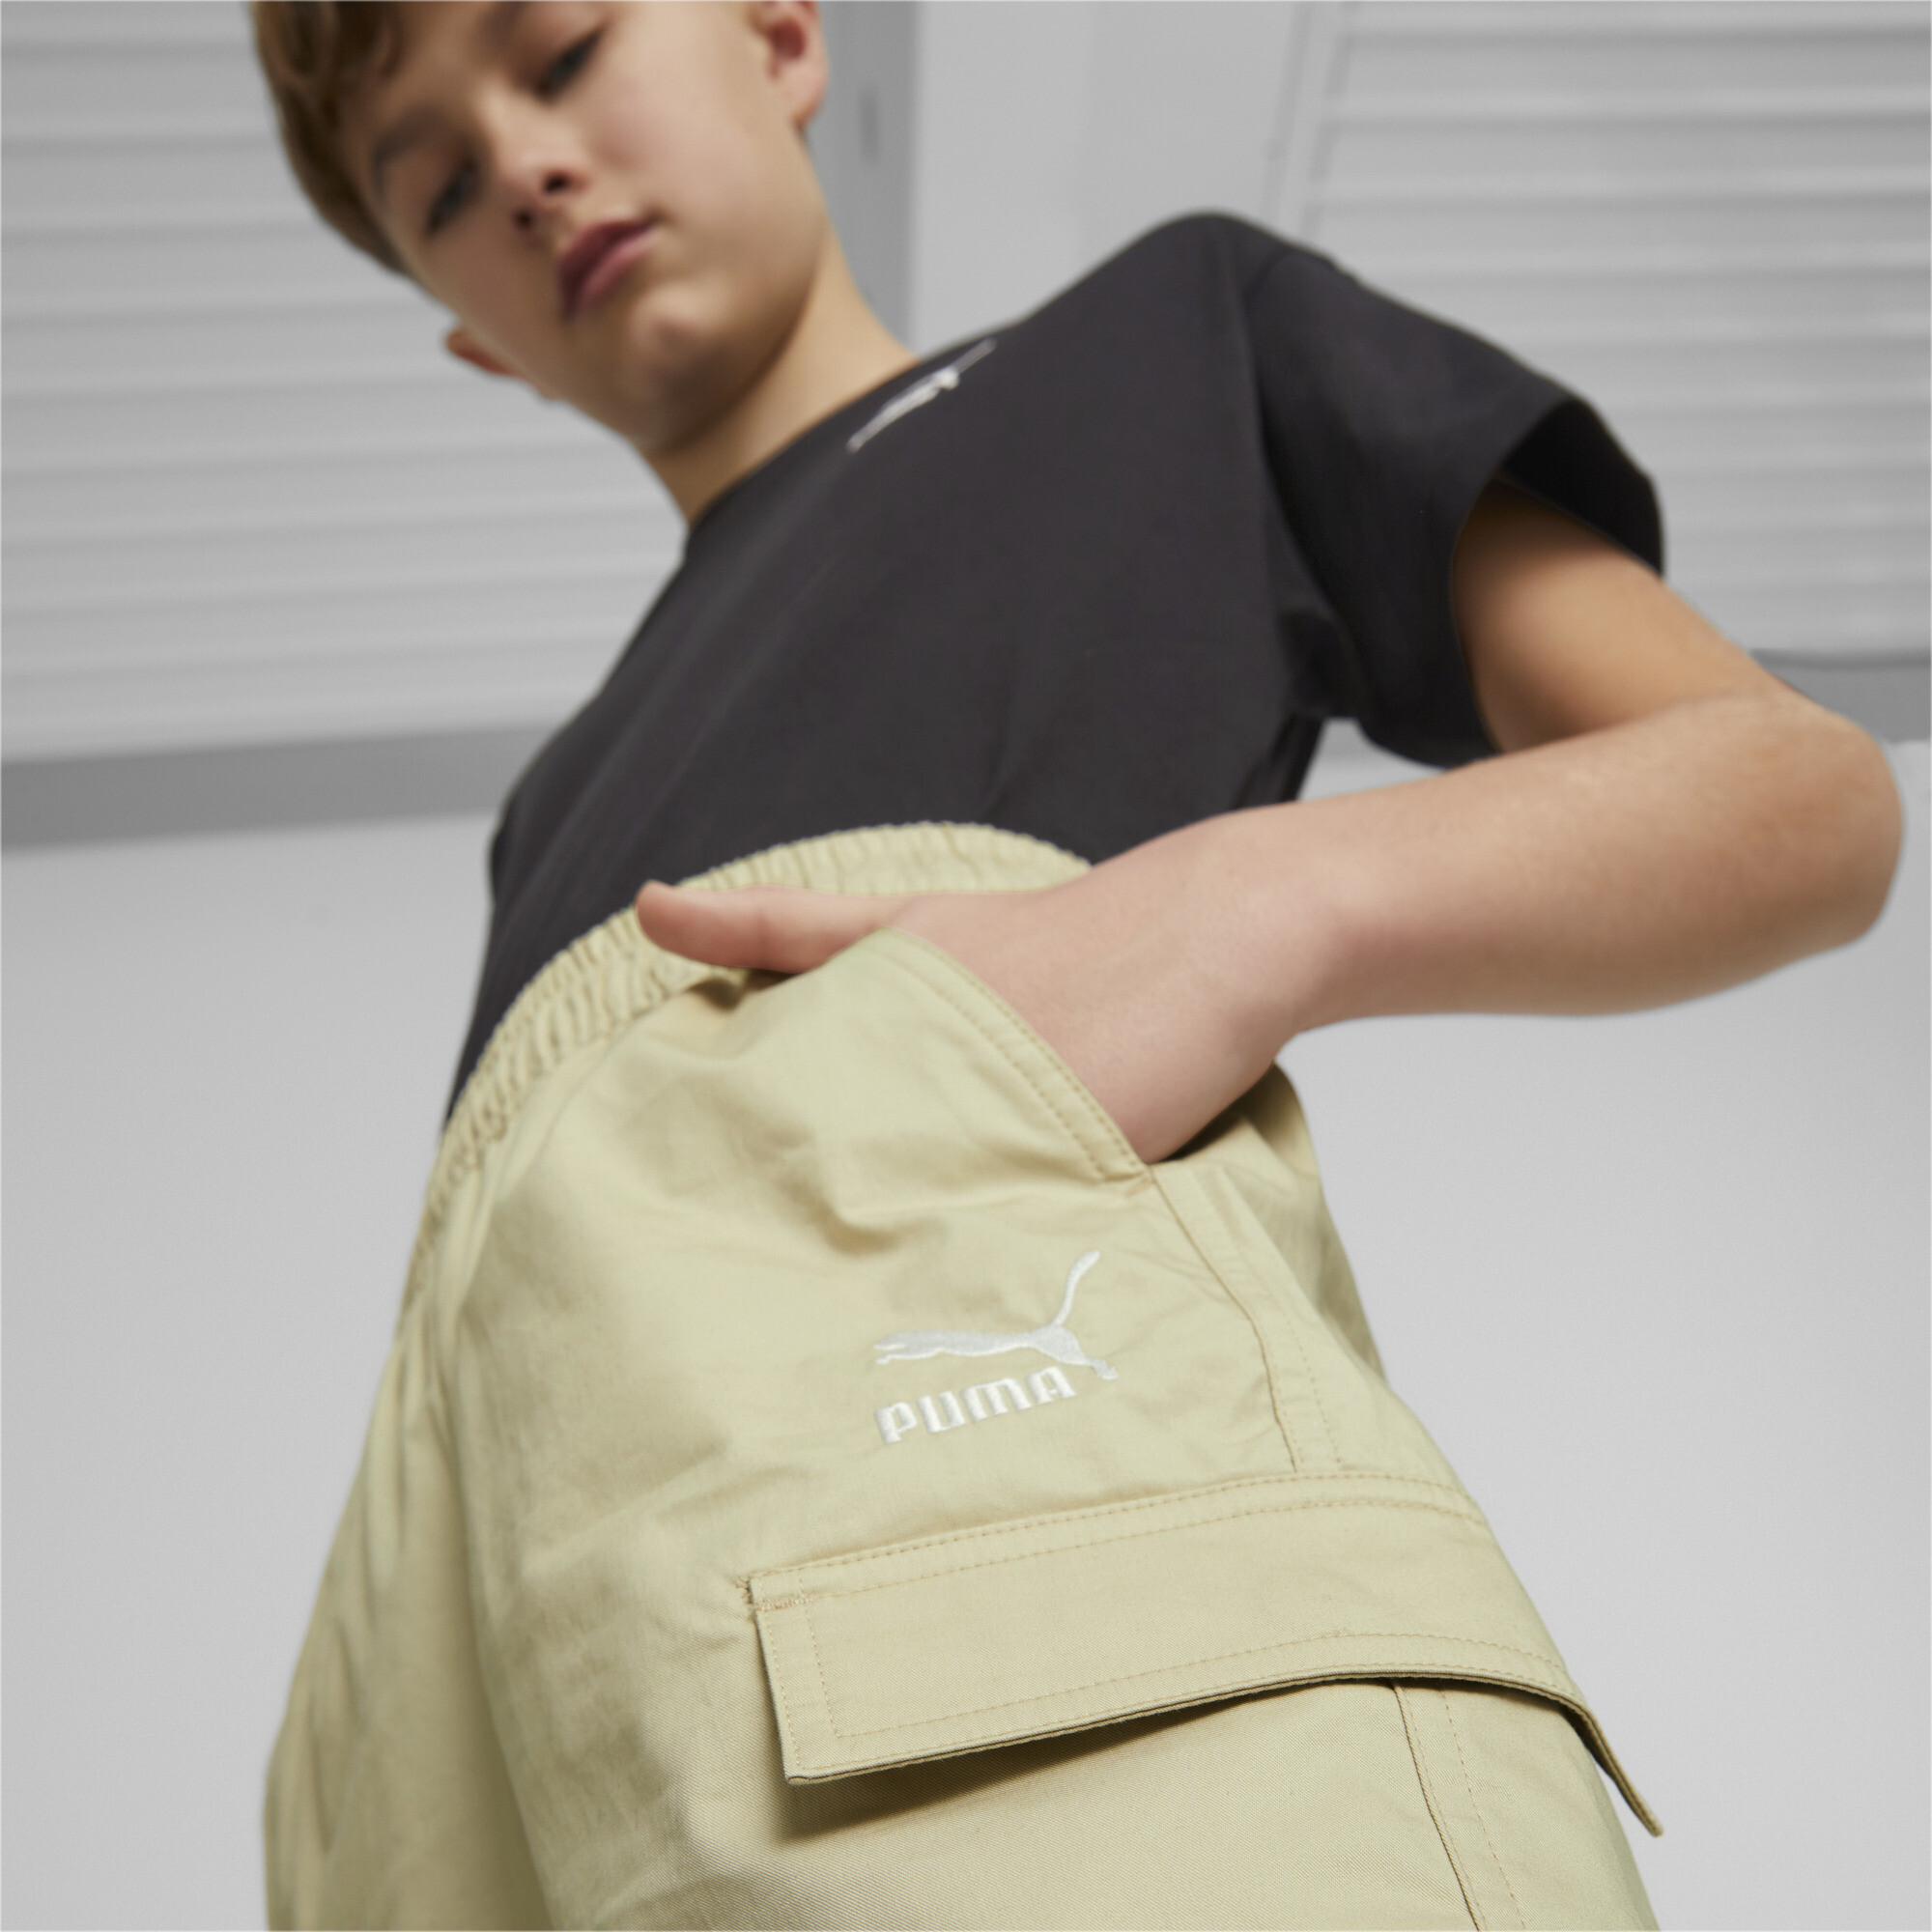 PUMA Classics Woven Sweatpants In Beige, Size 5-6 Youth